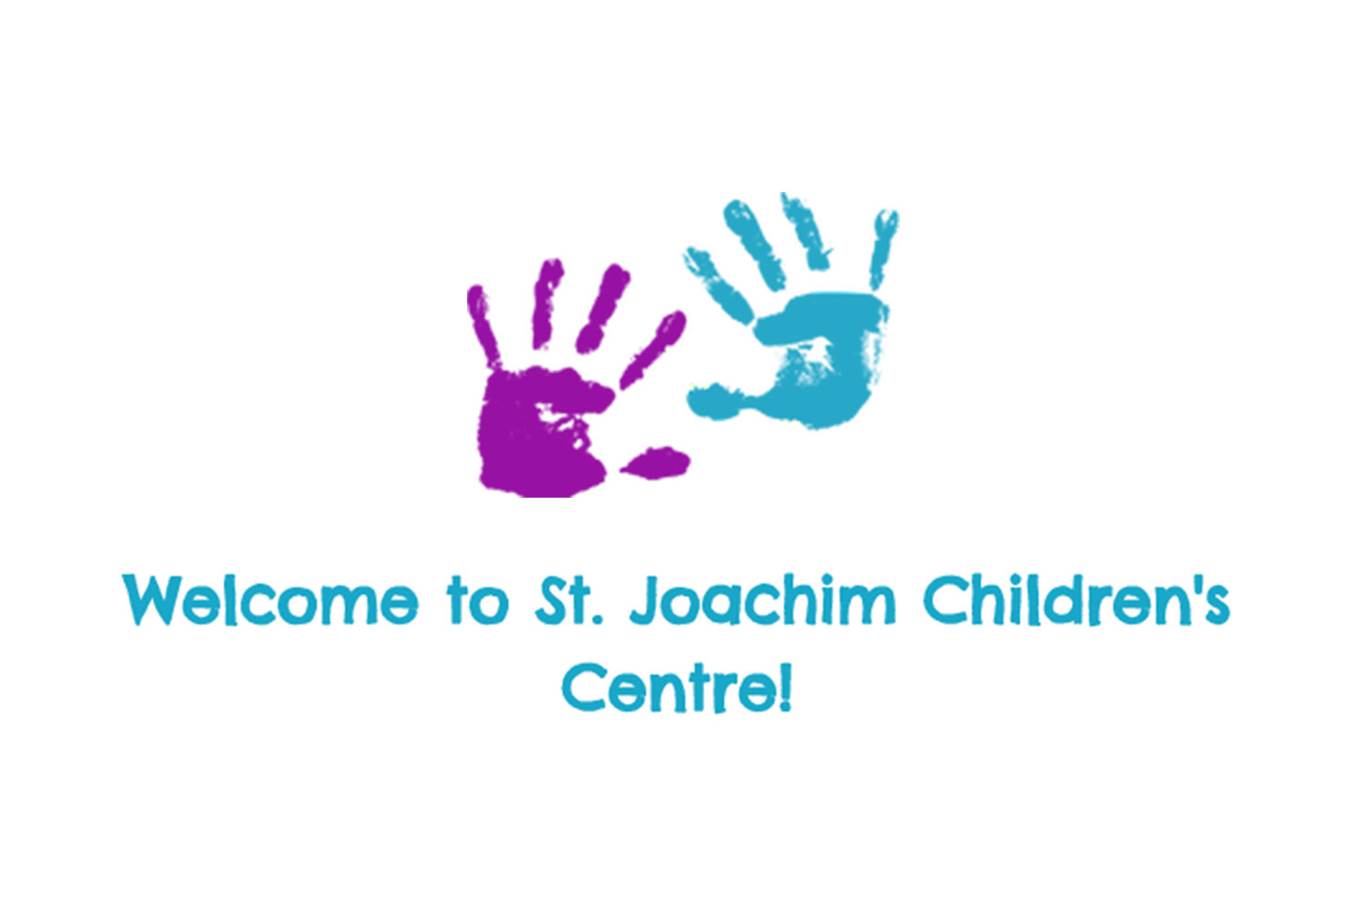 St Joachim Children's Centre